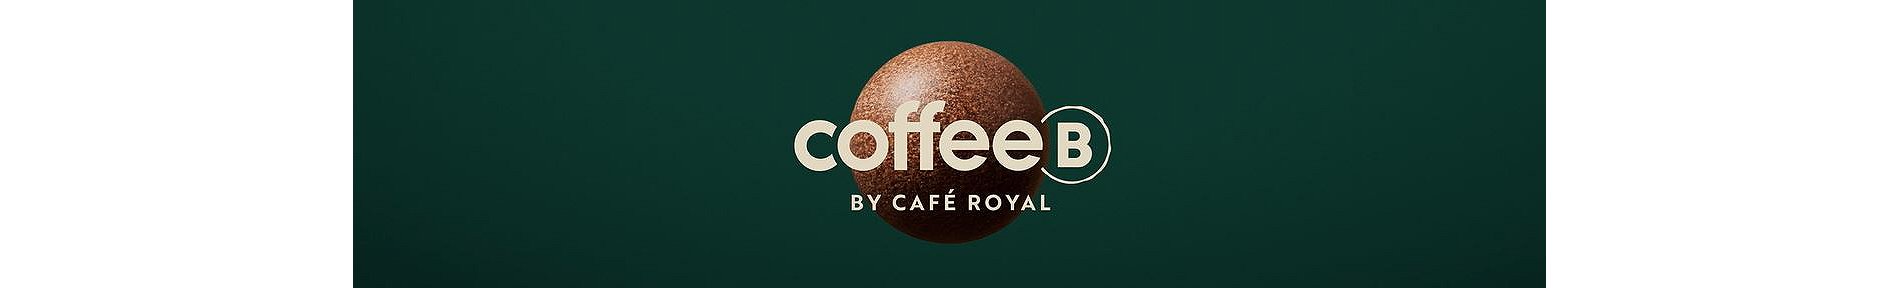 Vidéo présentation Café Royal CoffeeB Globe